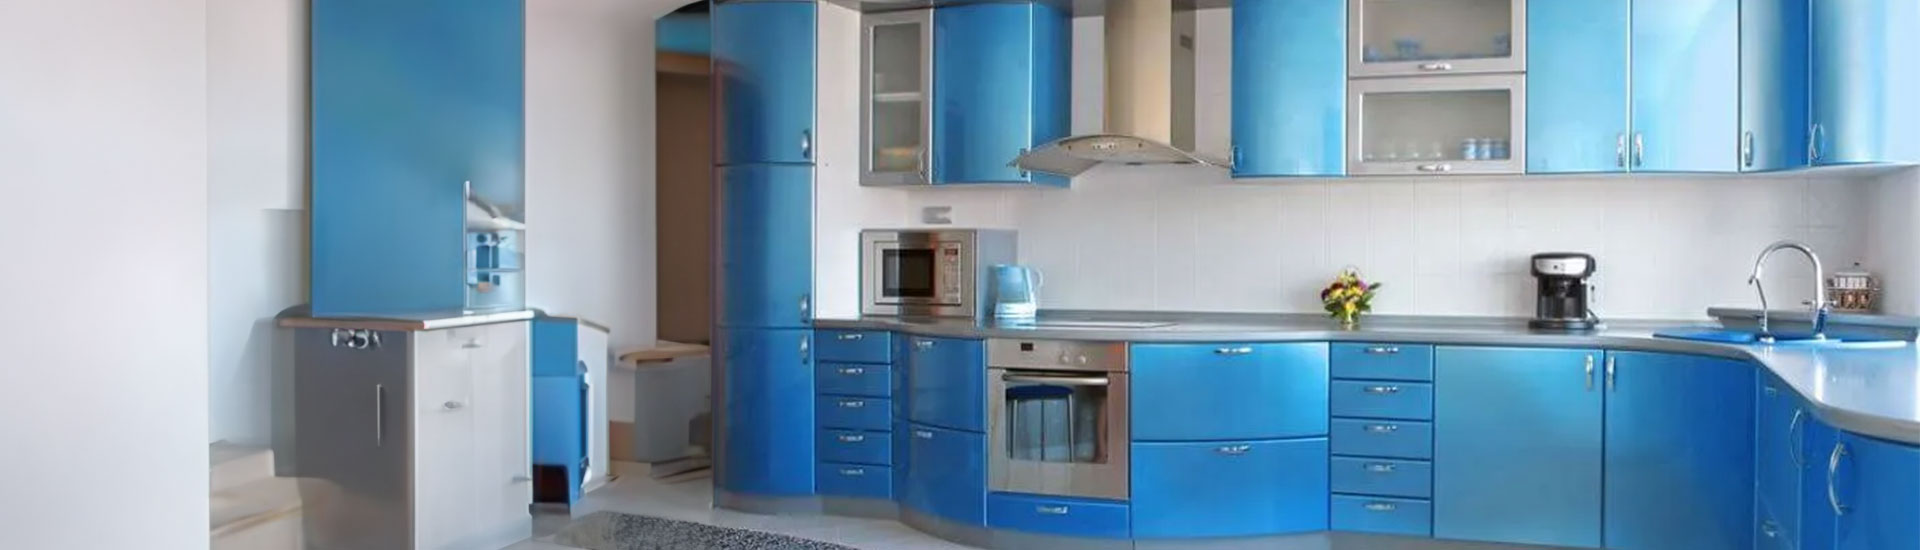 Turquoise Kitchen Cabinet Wraps